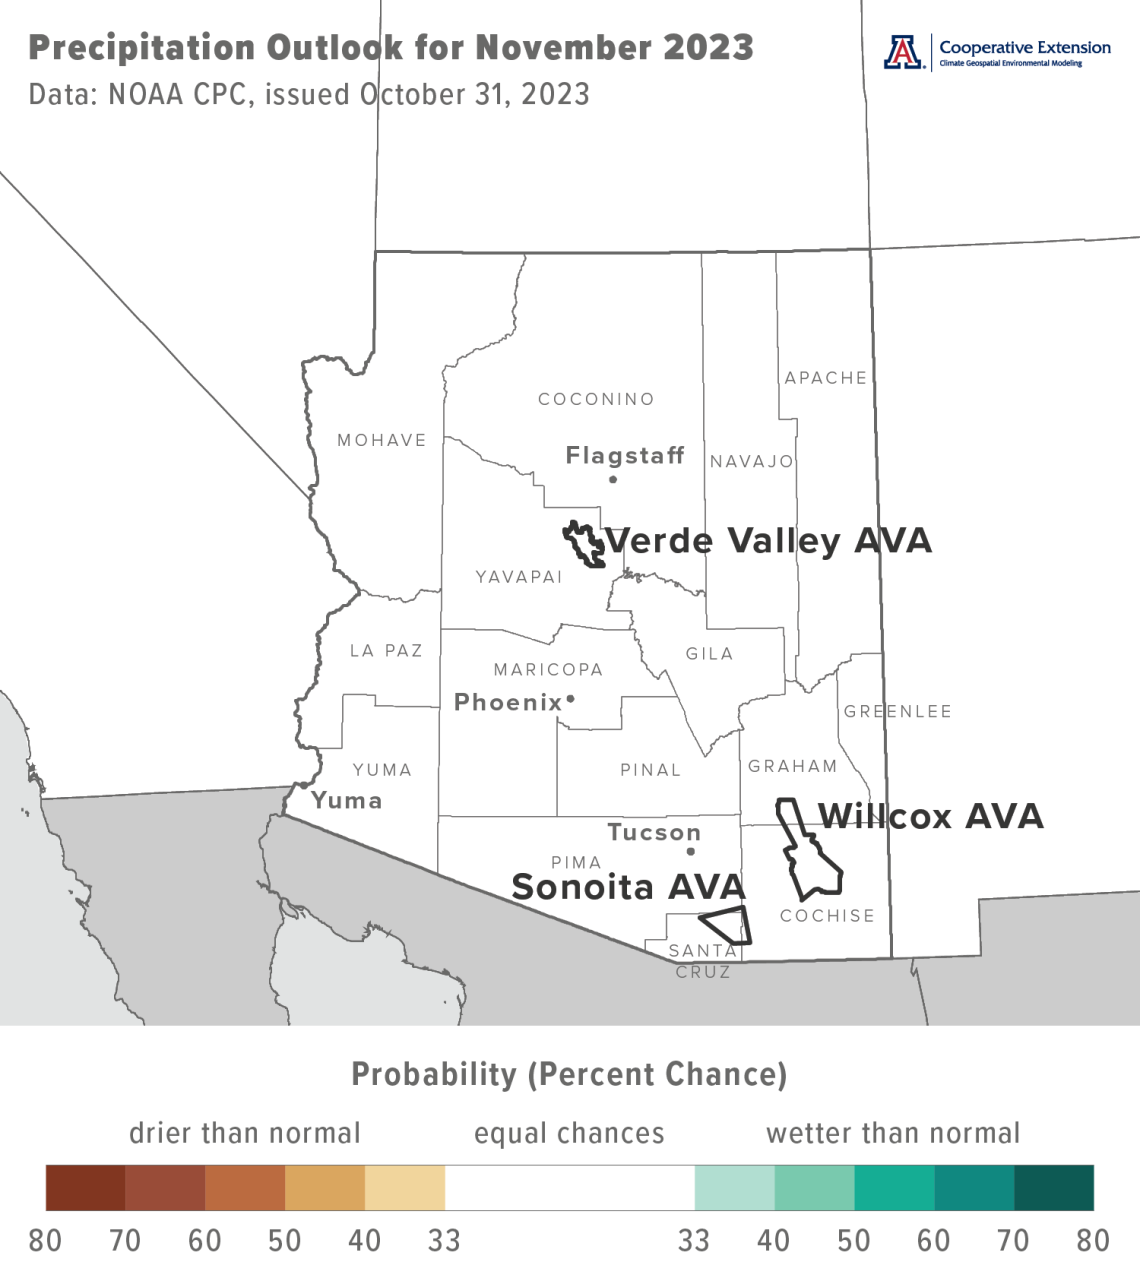 November 2023 precipitation outlook map for Arizona